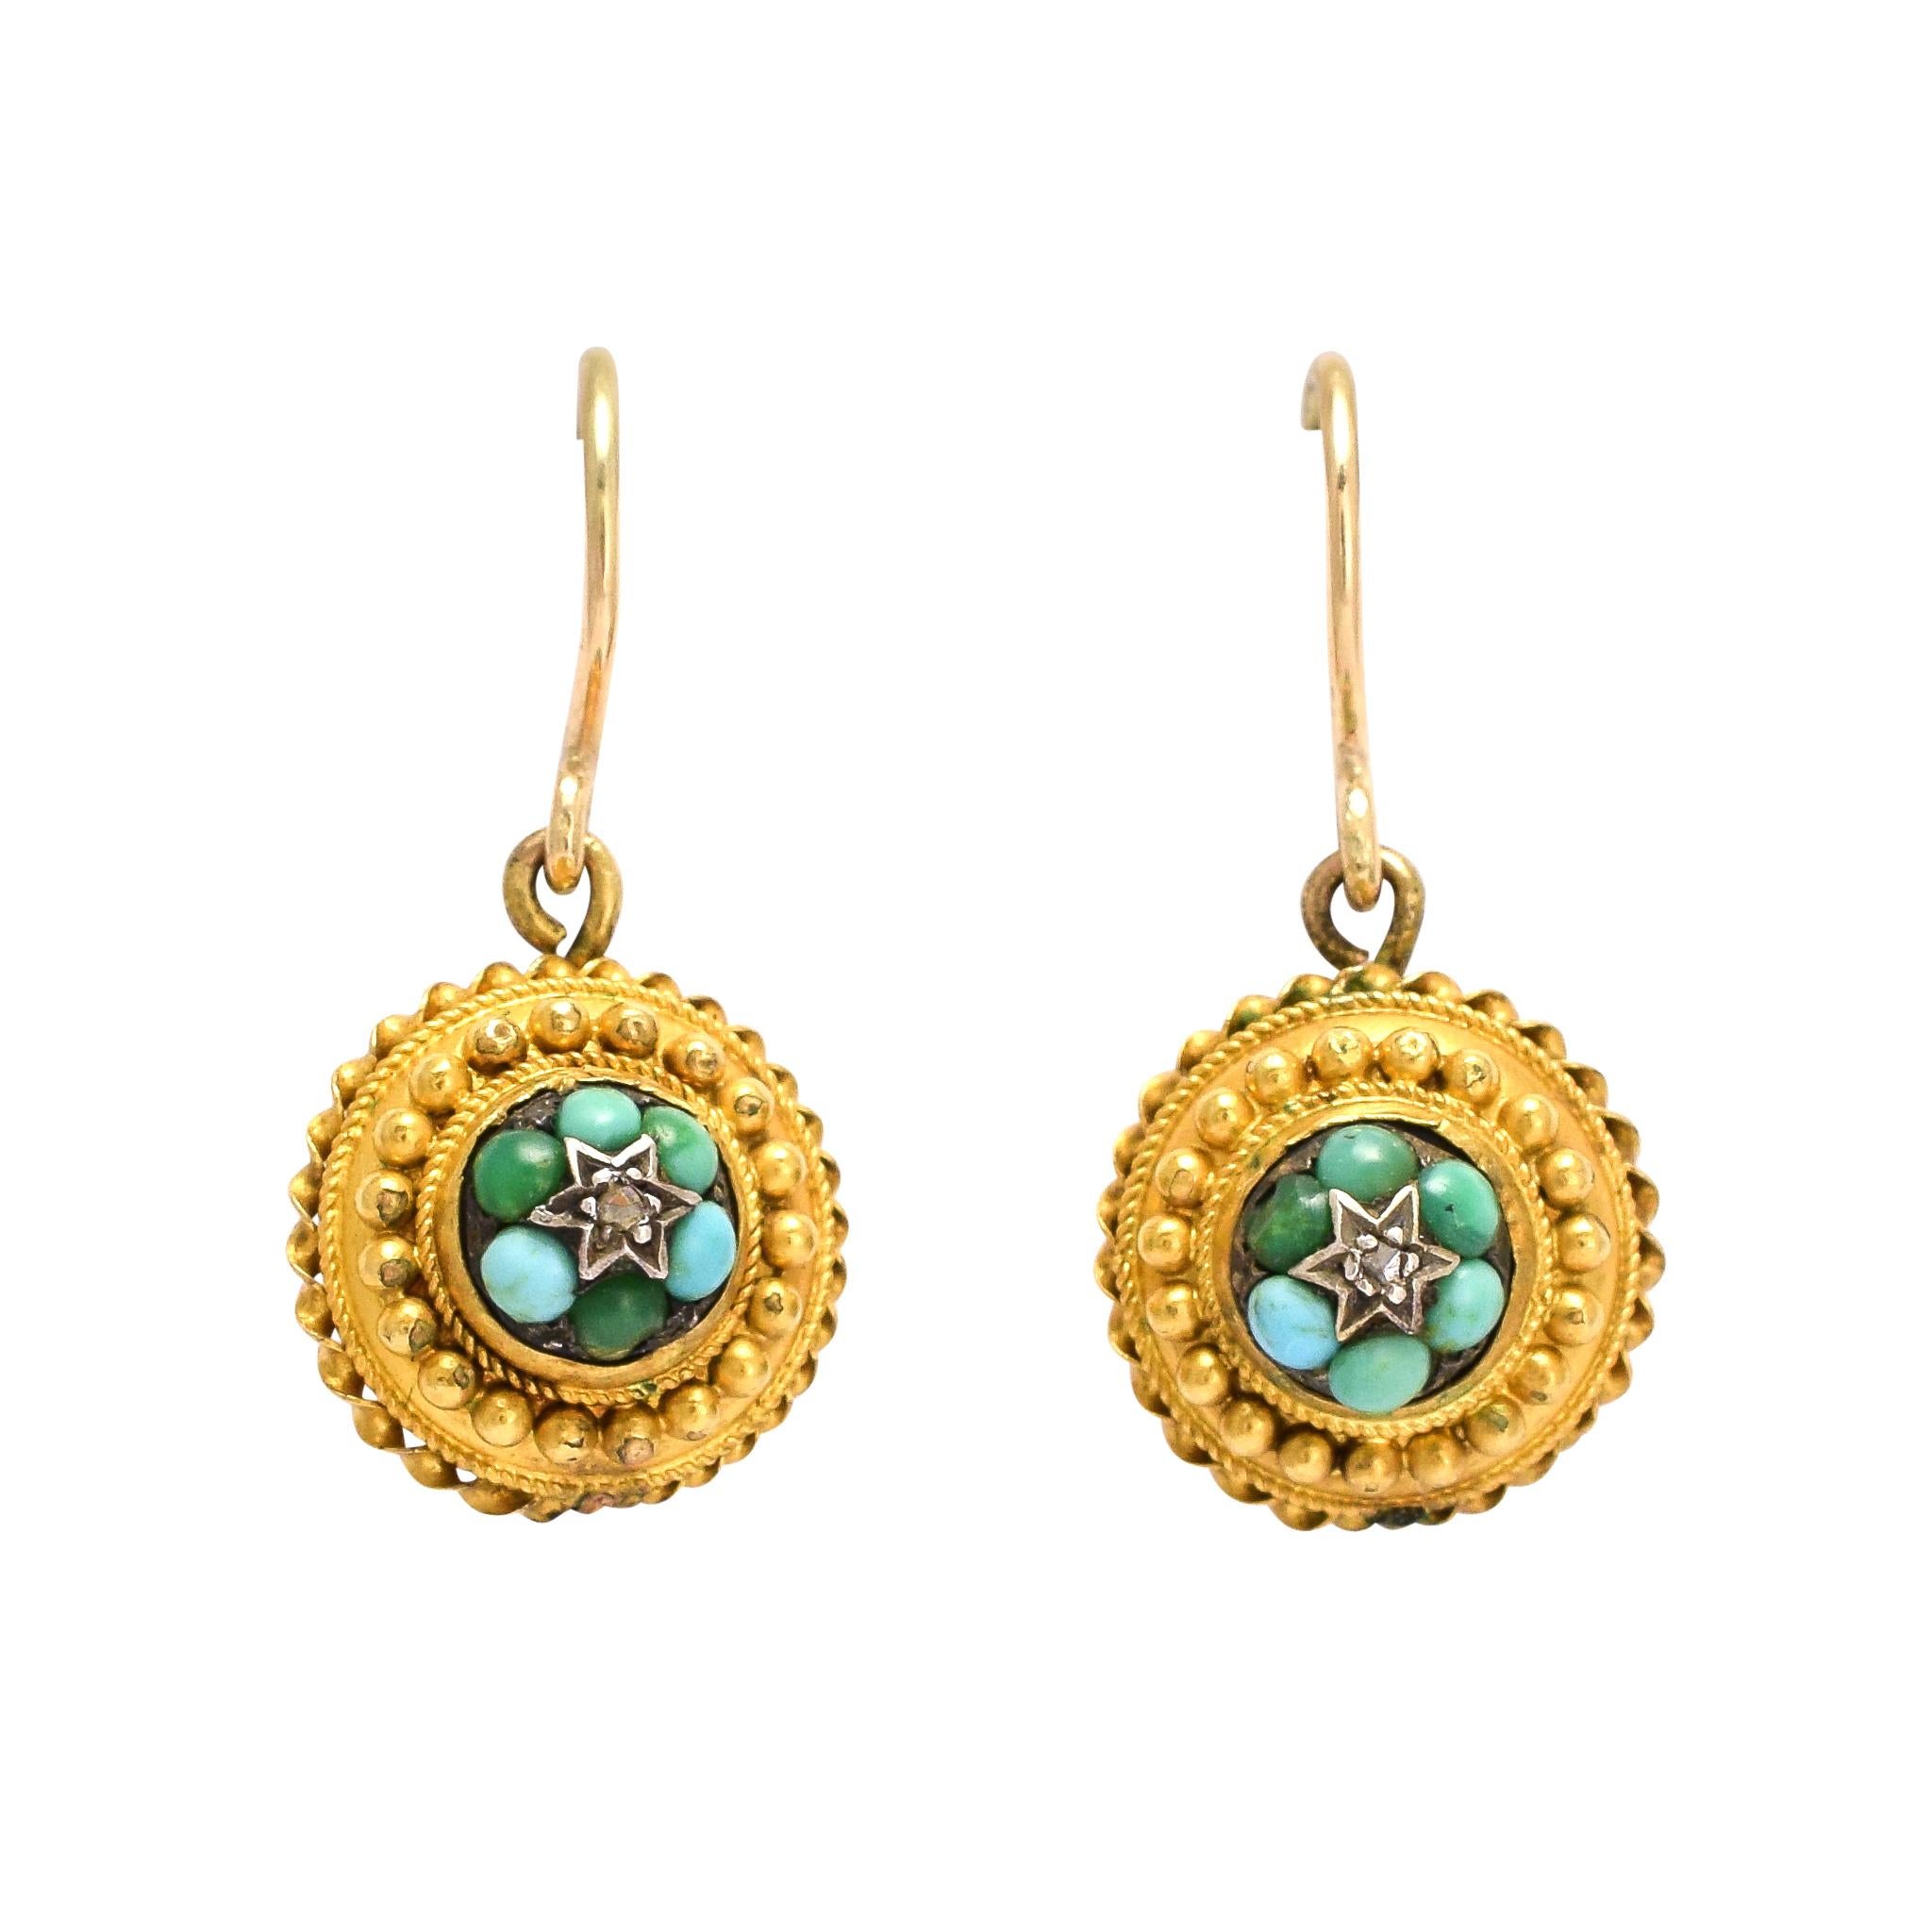 Antique Victorian Etruscan Revival Turquoise Diamond Earrings